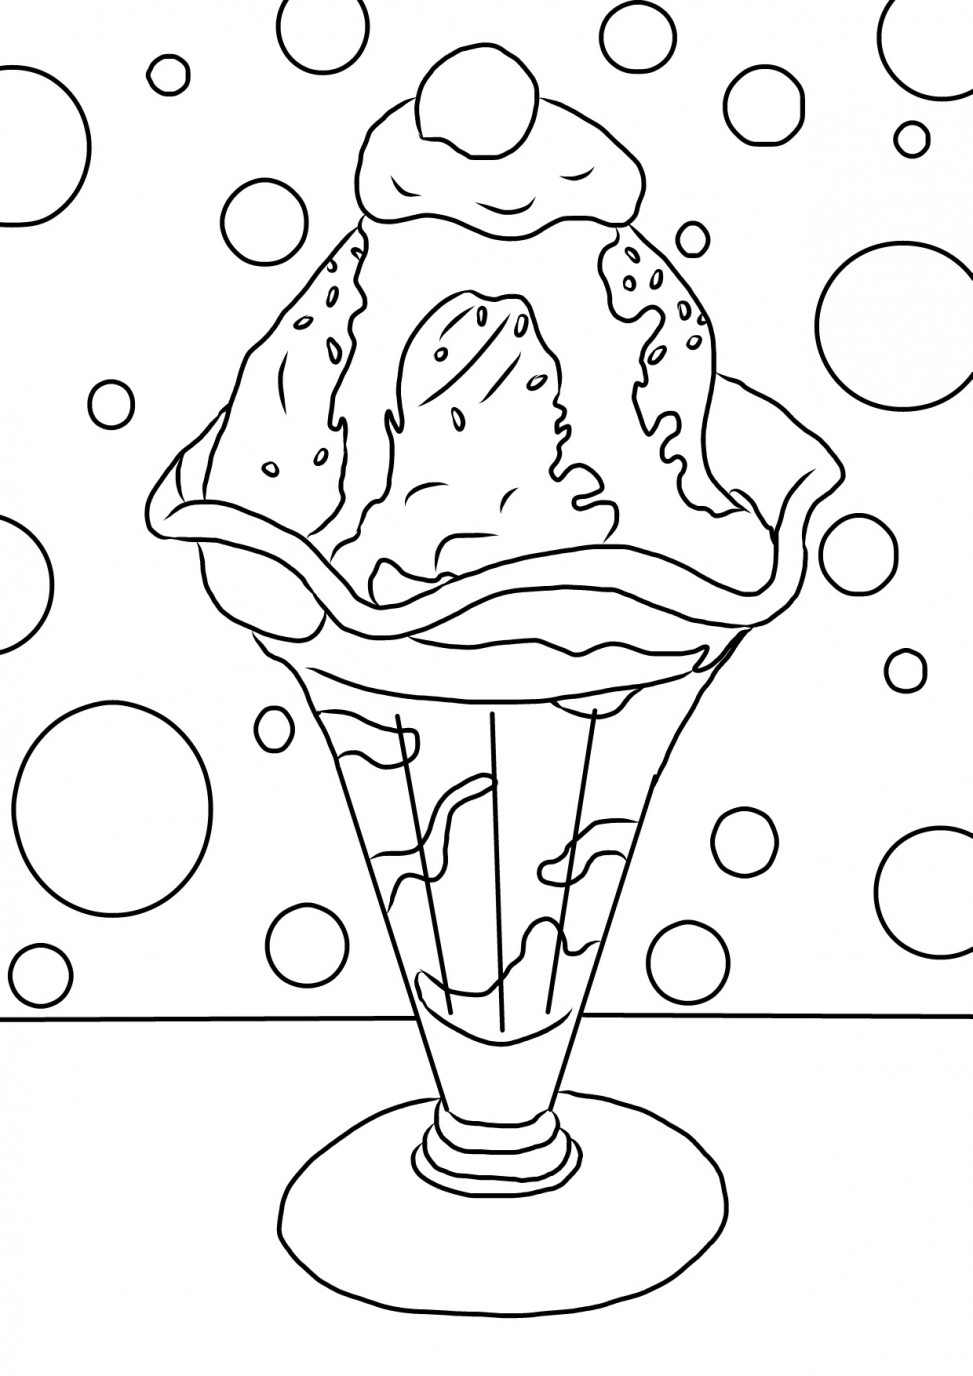 Ice cream sundae colouring sheet